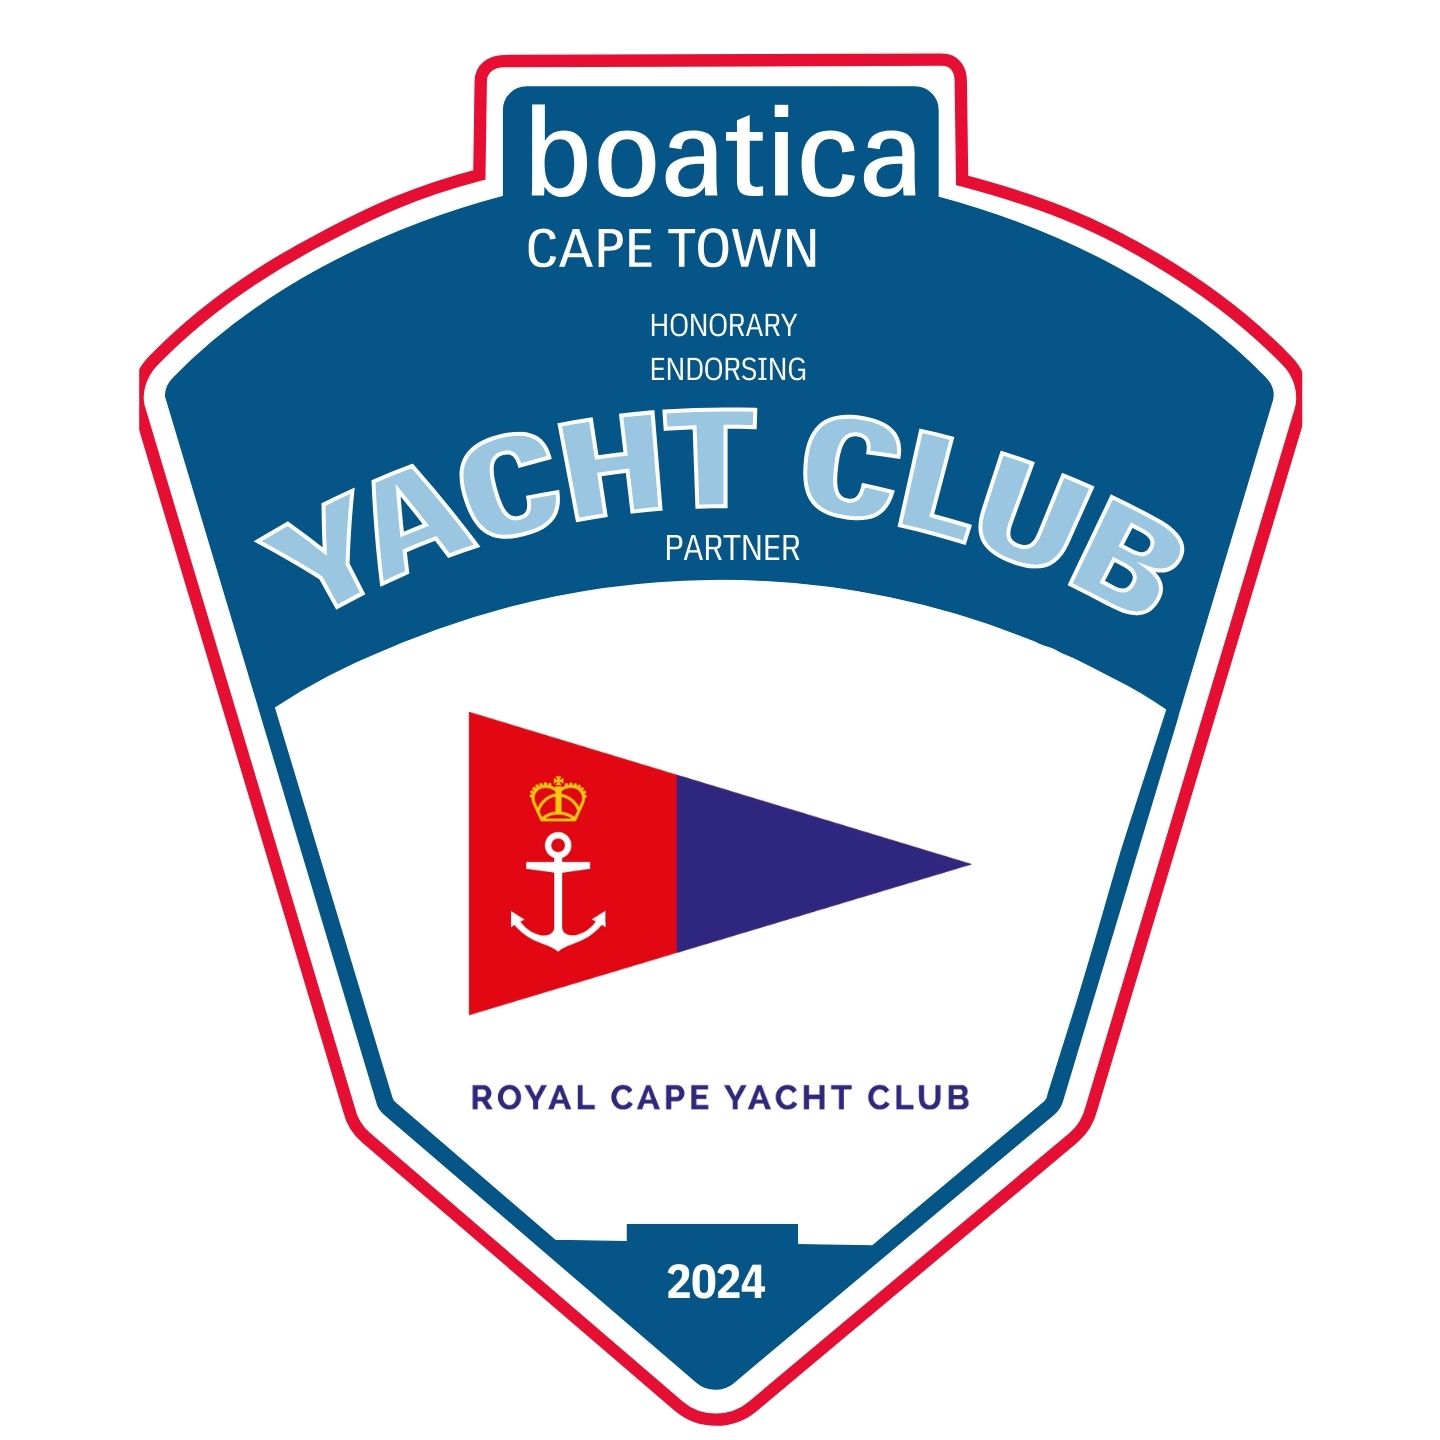 Boatica honorary yacht club partner logo.ai - 1